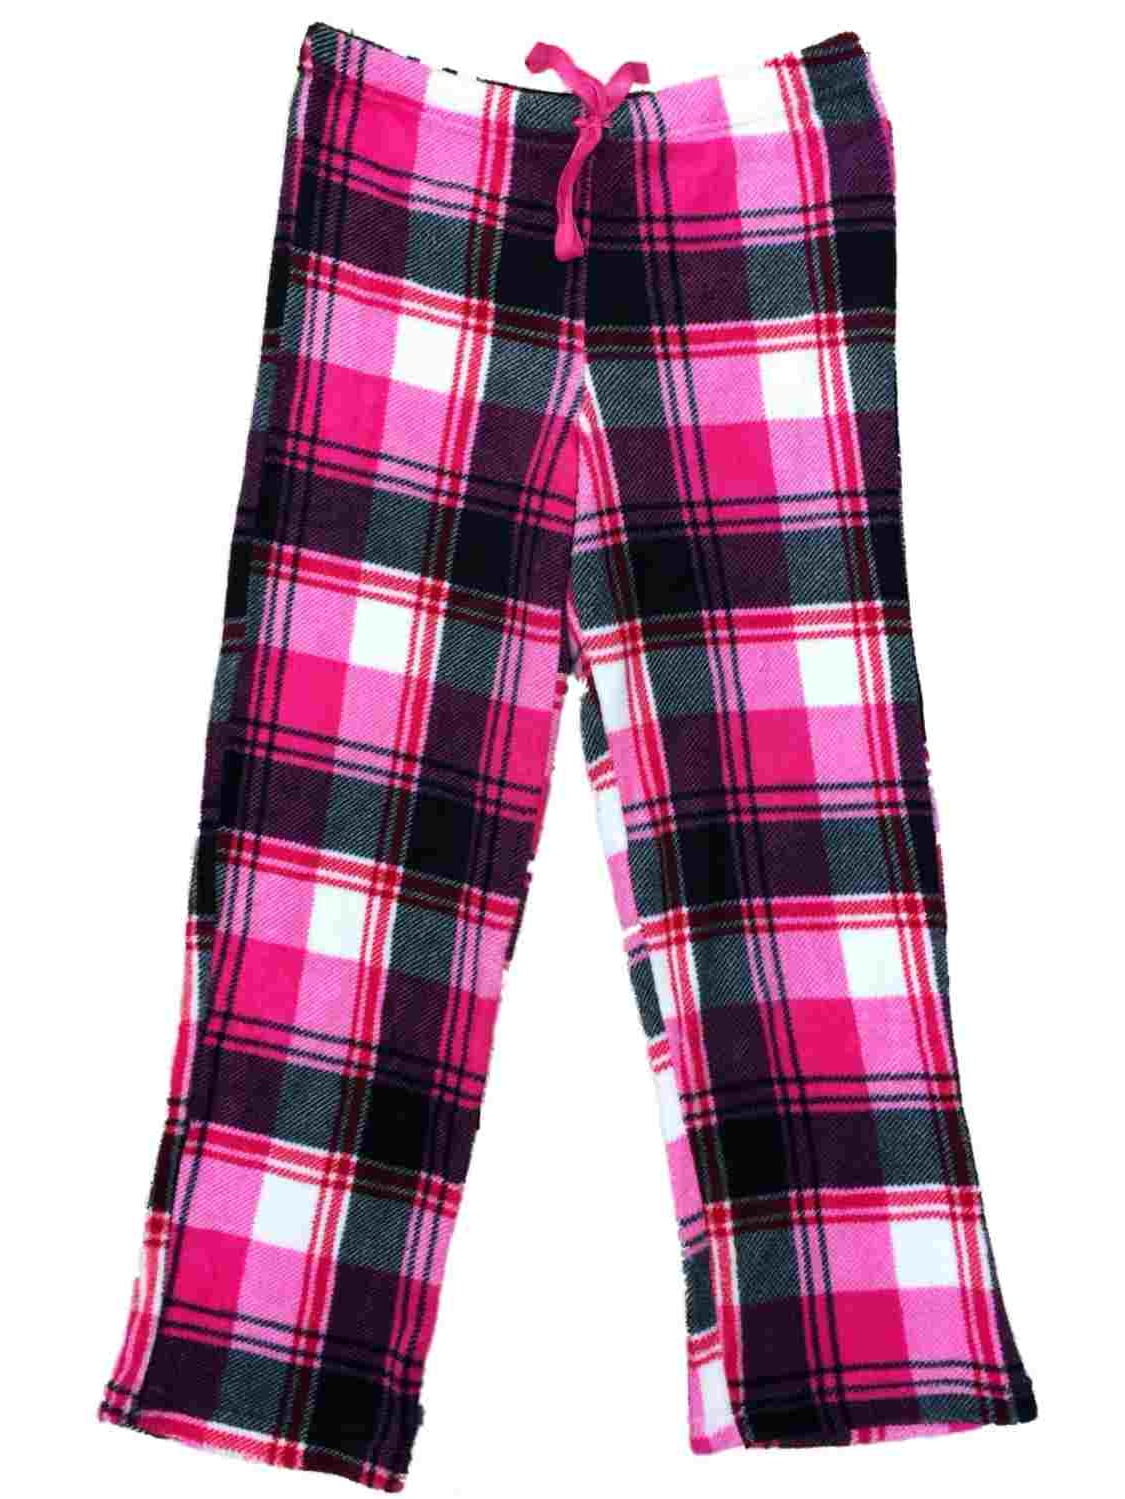 pink and black plaid pants